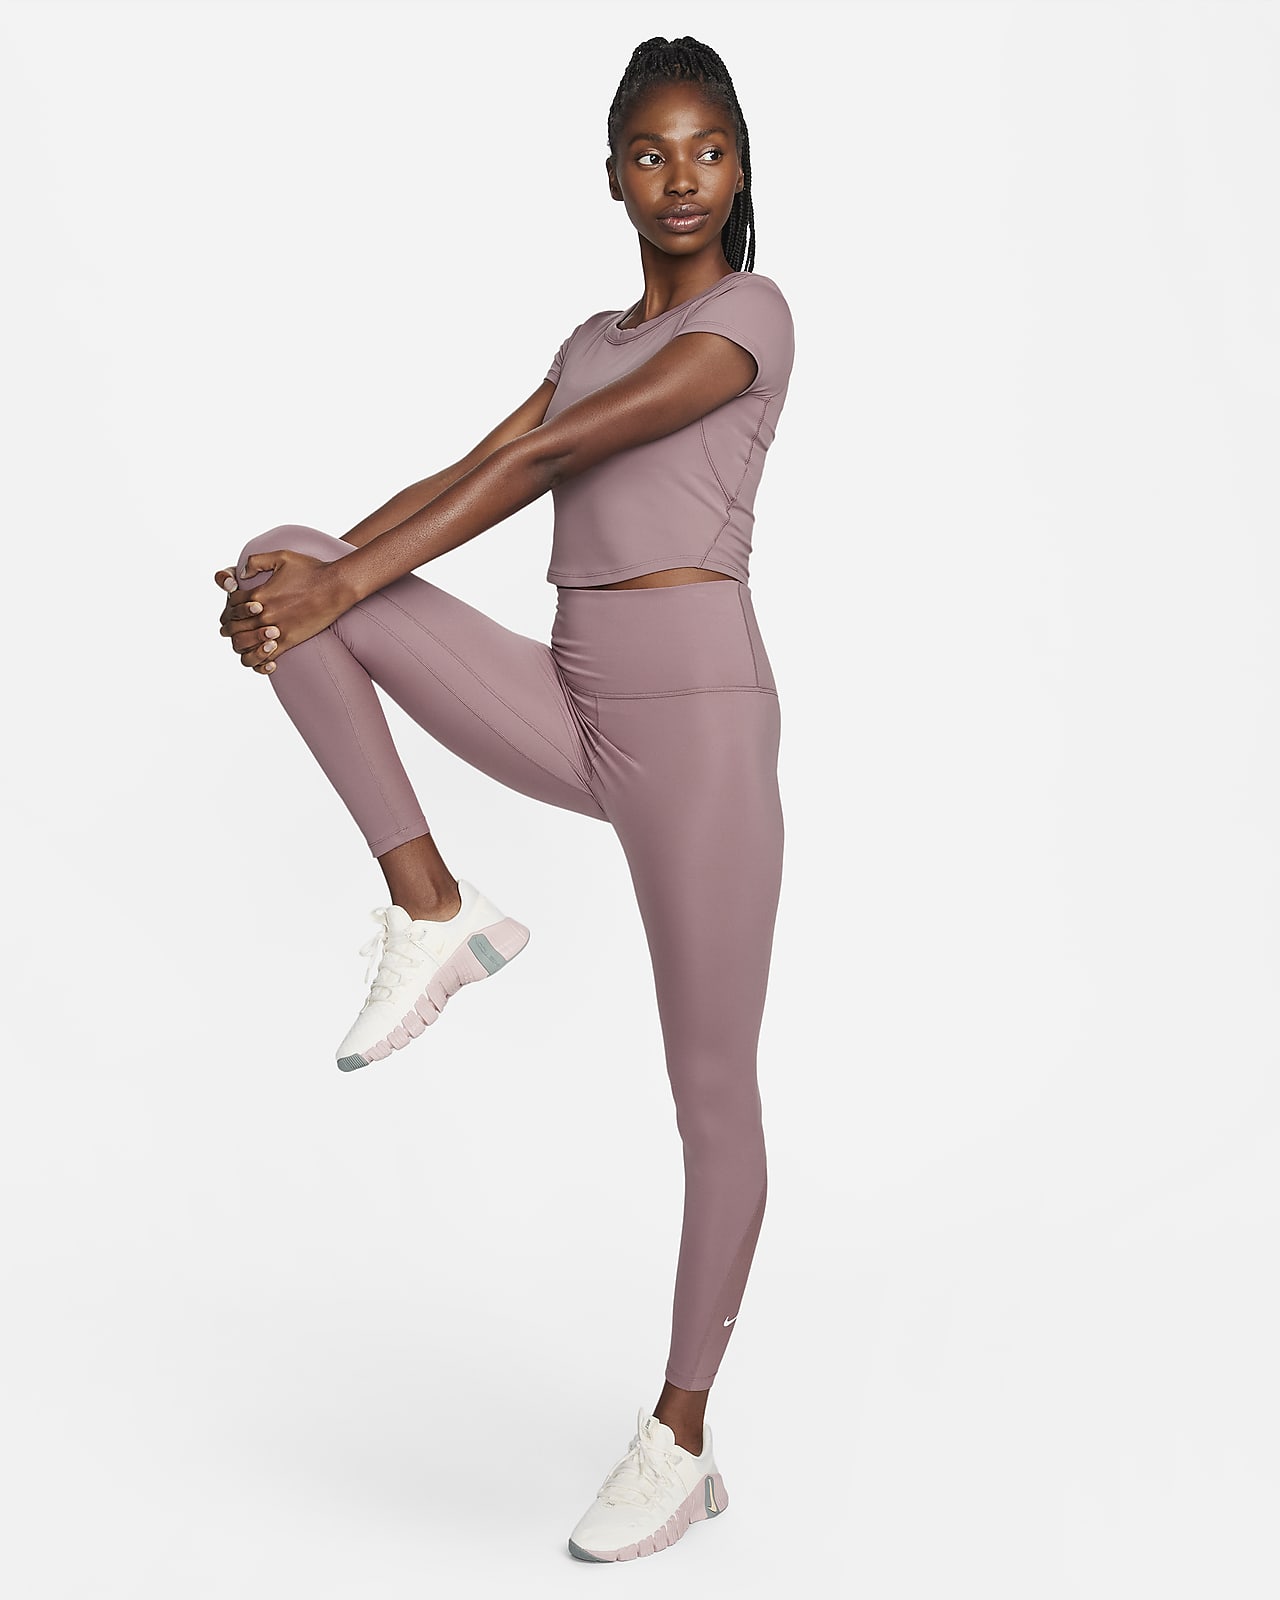 Nike Women's One Luxe 7/8 Laced Legging Purple Smoke CZ9932-531 Size XS